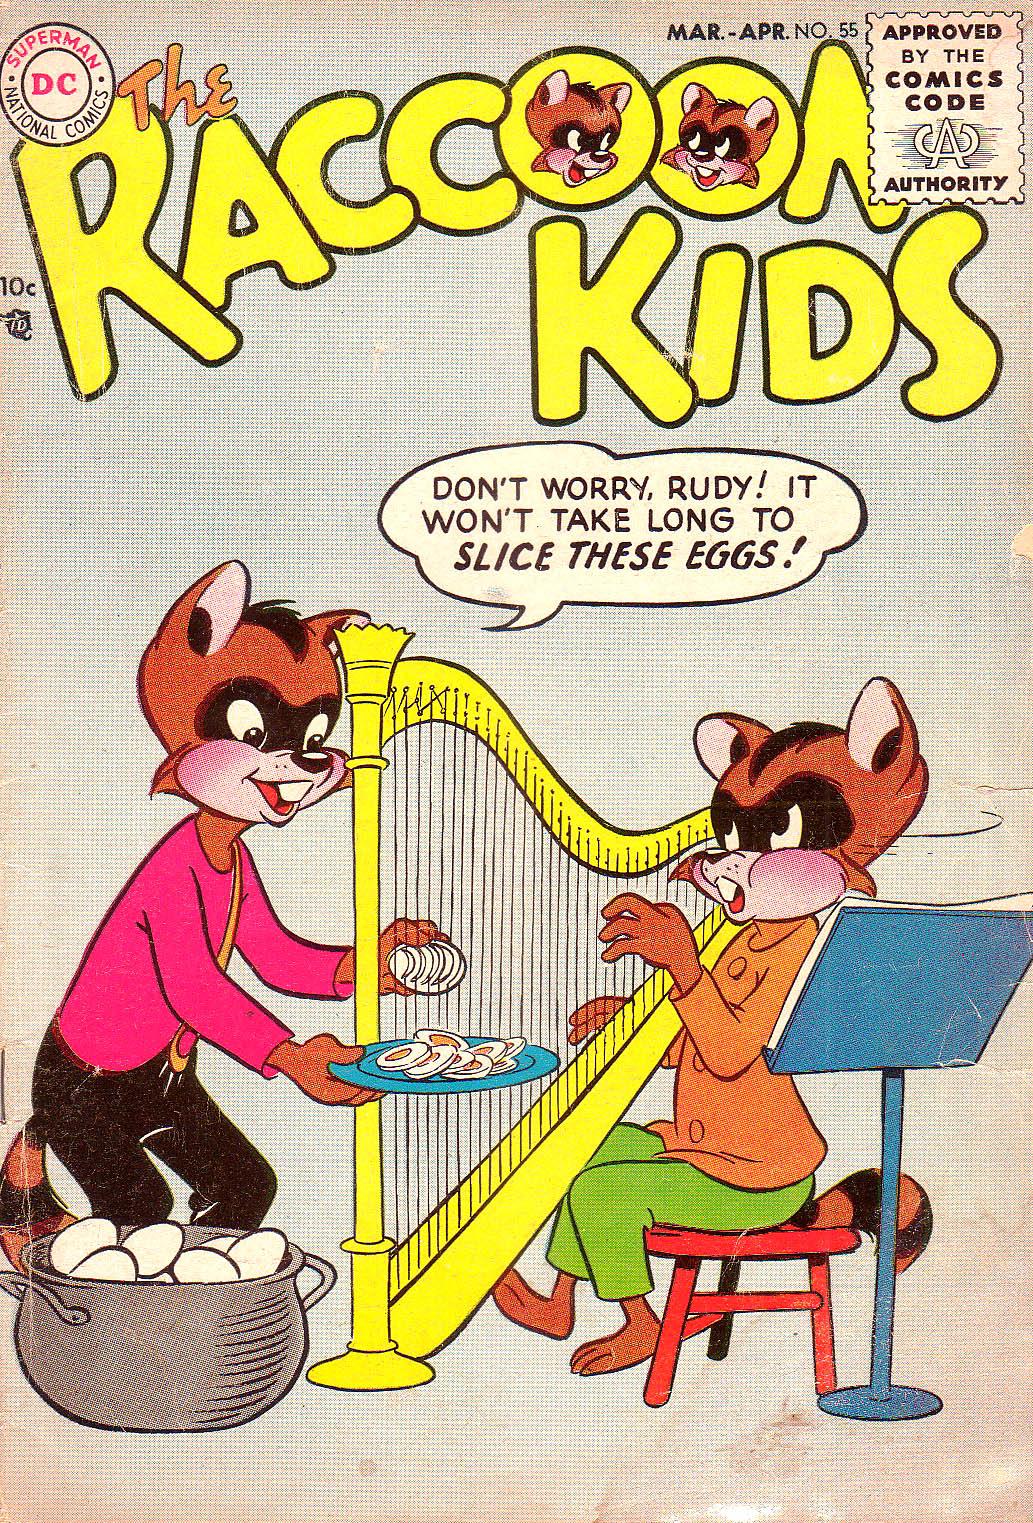 Raccoon Kids Vol. 1 #55